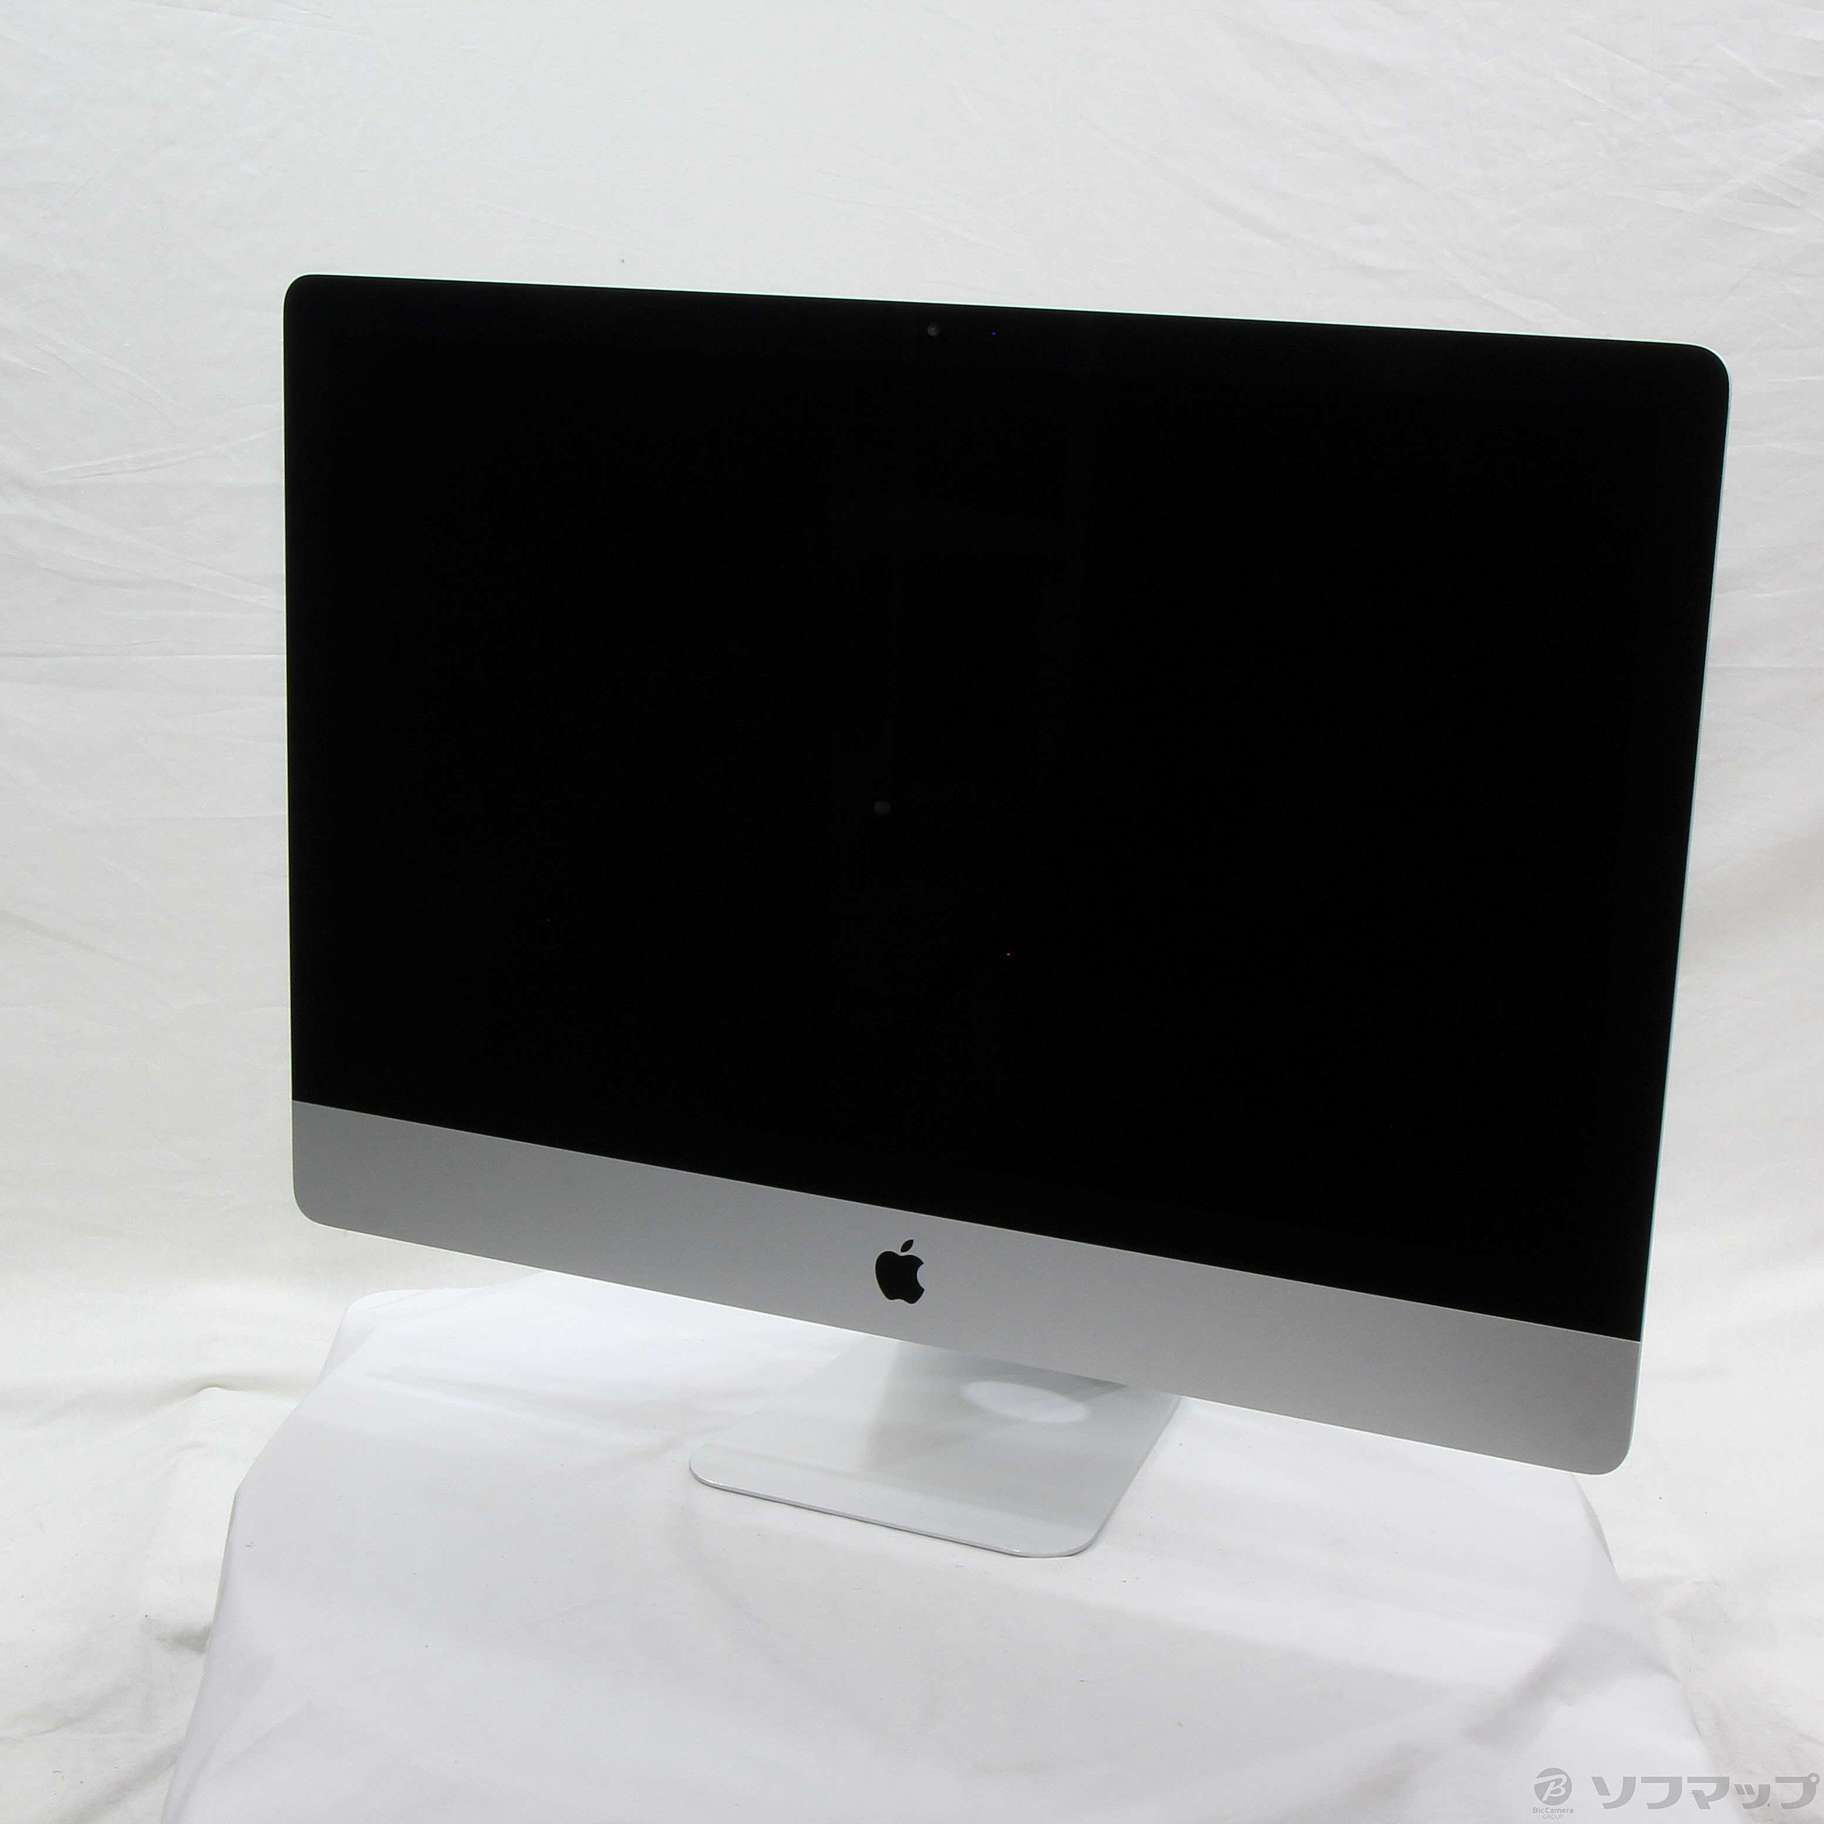 中古】iMac 27-inch Late 2012 MD096J／A Core_i7 3.4GHz 32GB 